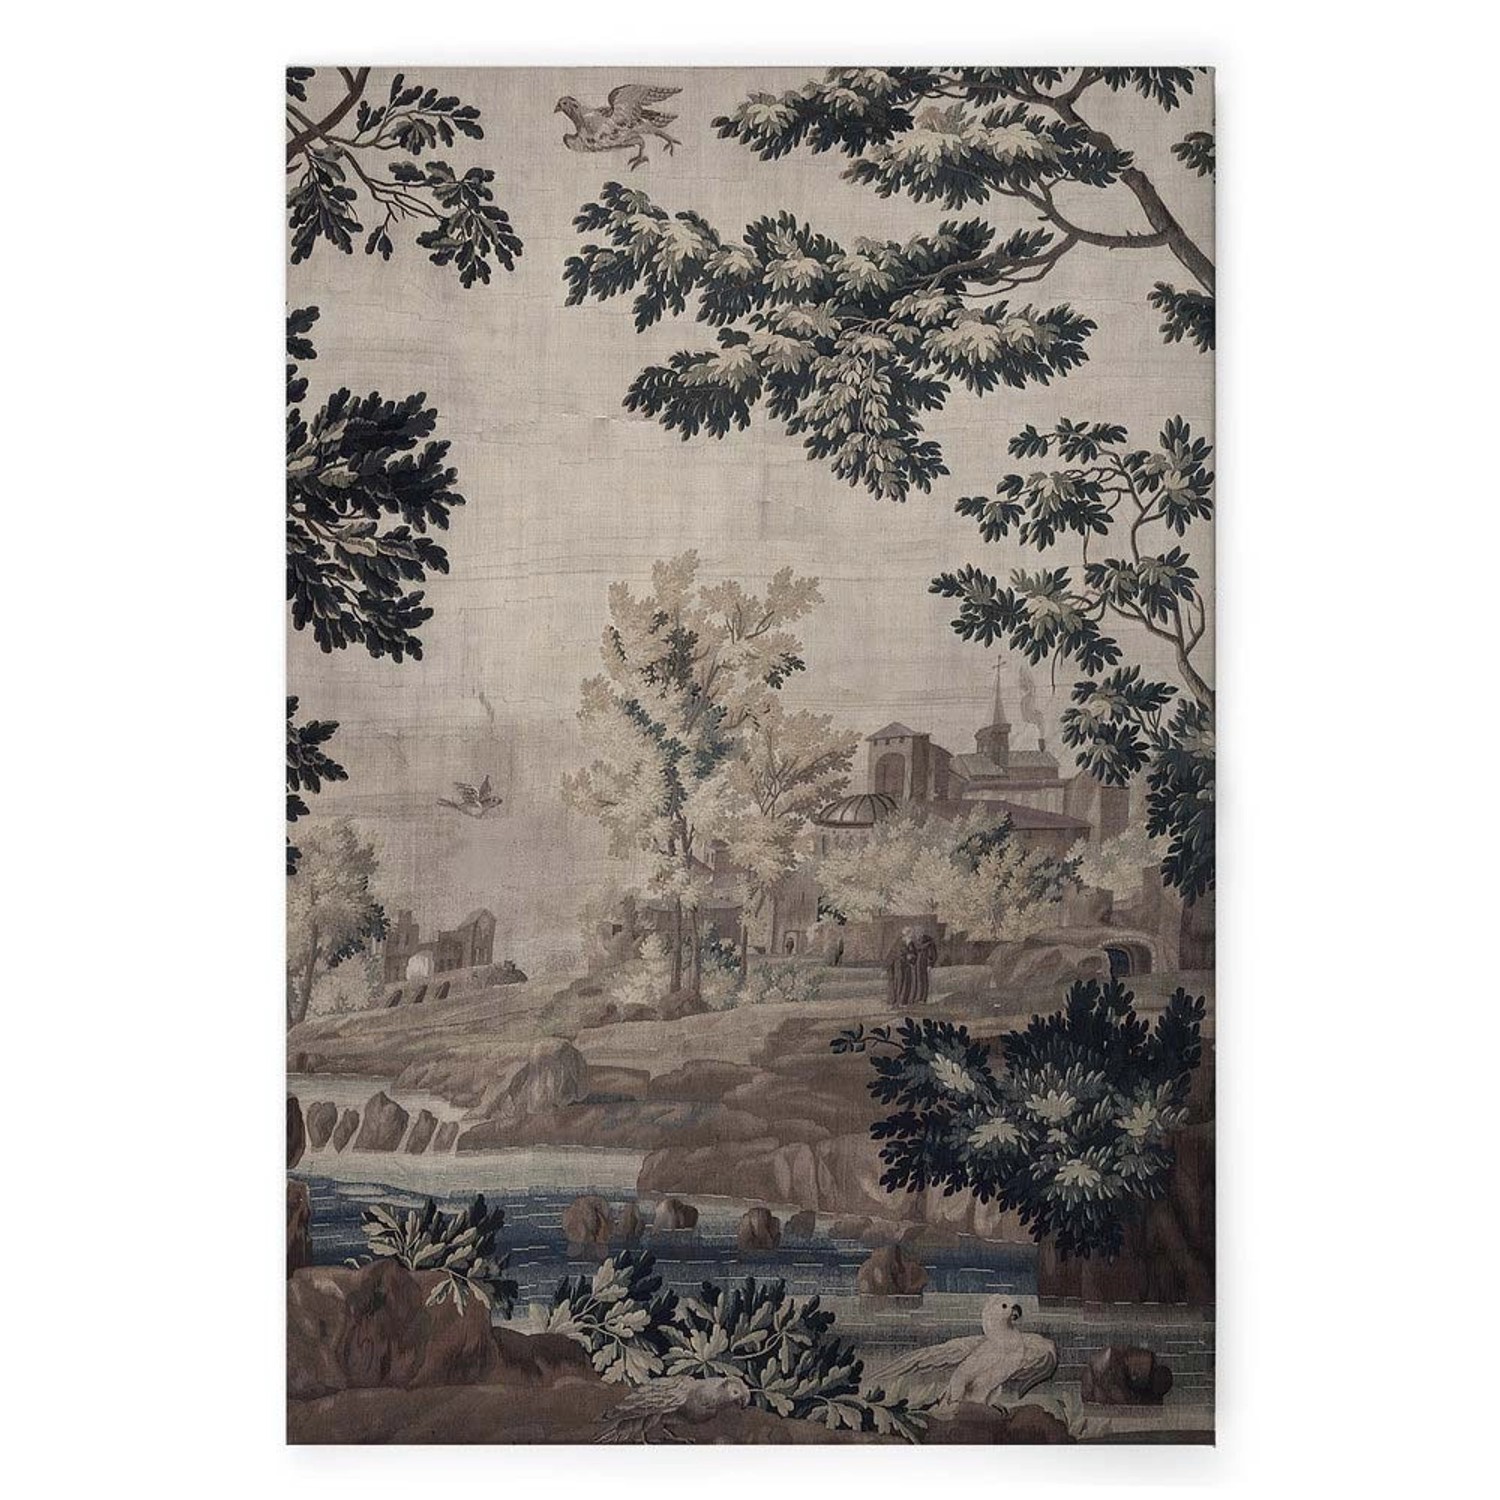 Bricoflor Gobelin Bild Mit Märchenwald Kunst Wandbild Mit Landschaft In Textiloptik Vintage Leinwandbild Antik Stil 90 X